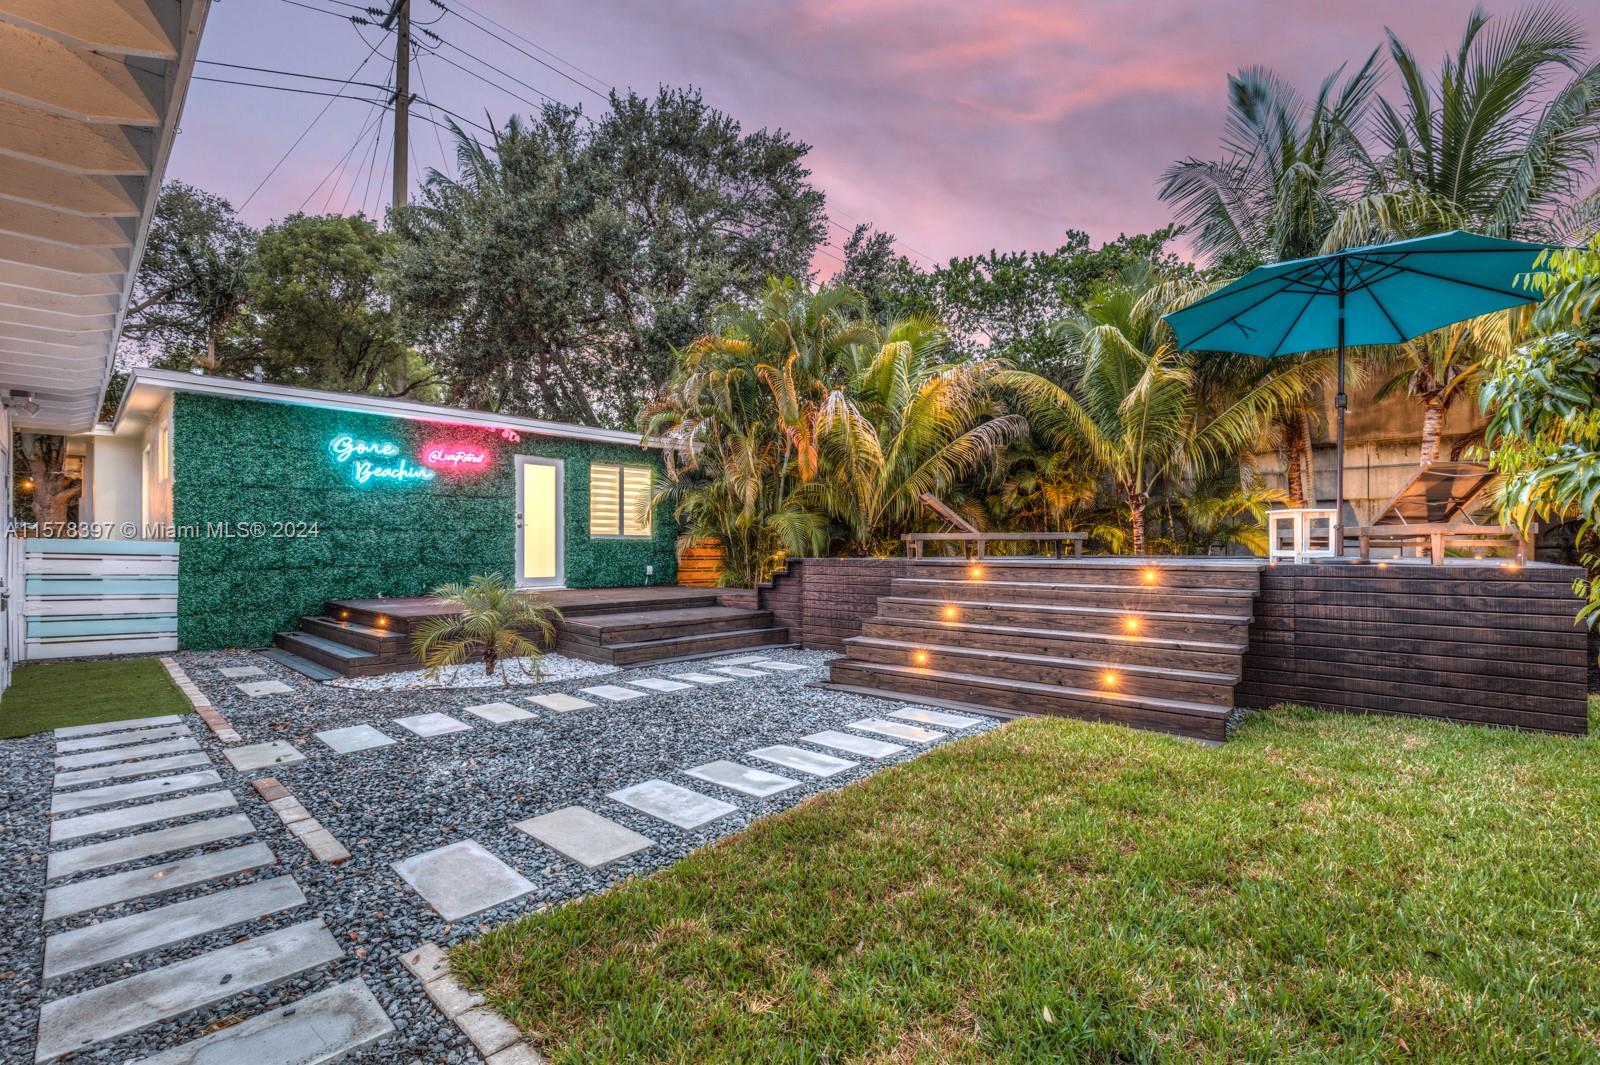 Property for Sale at 1960 Riverside Dr, Fort Lauderdale, Broward County, Florida - Bedrooms: 4 
Bathrooms: 3  - $680,000